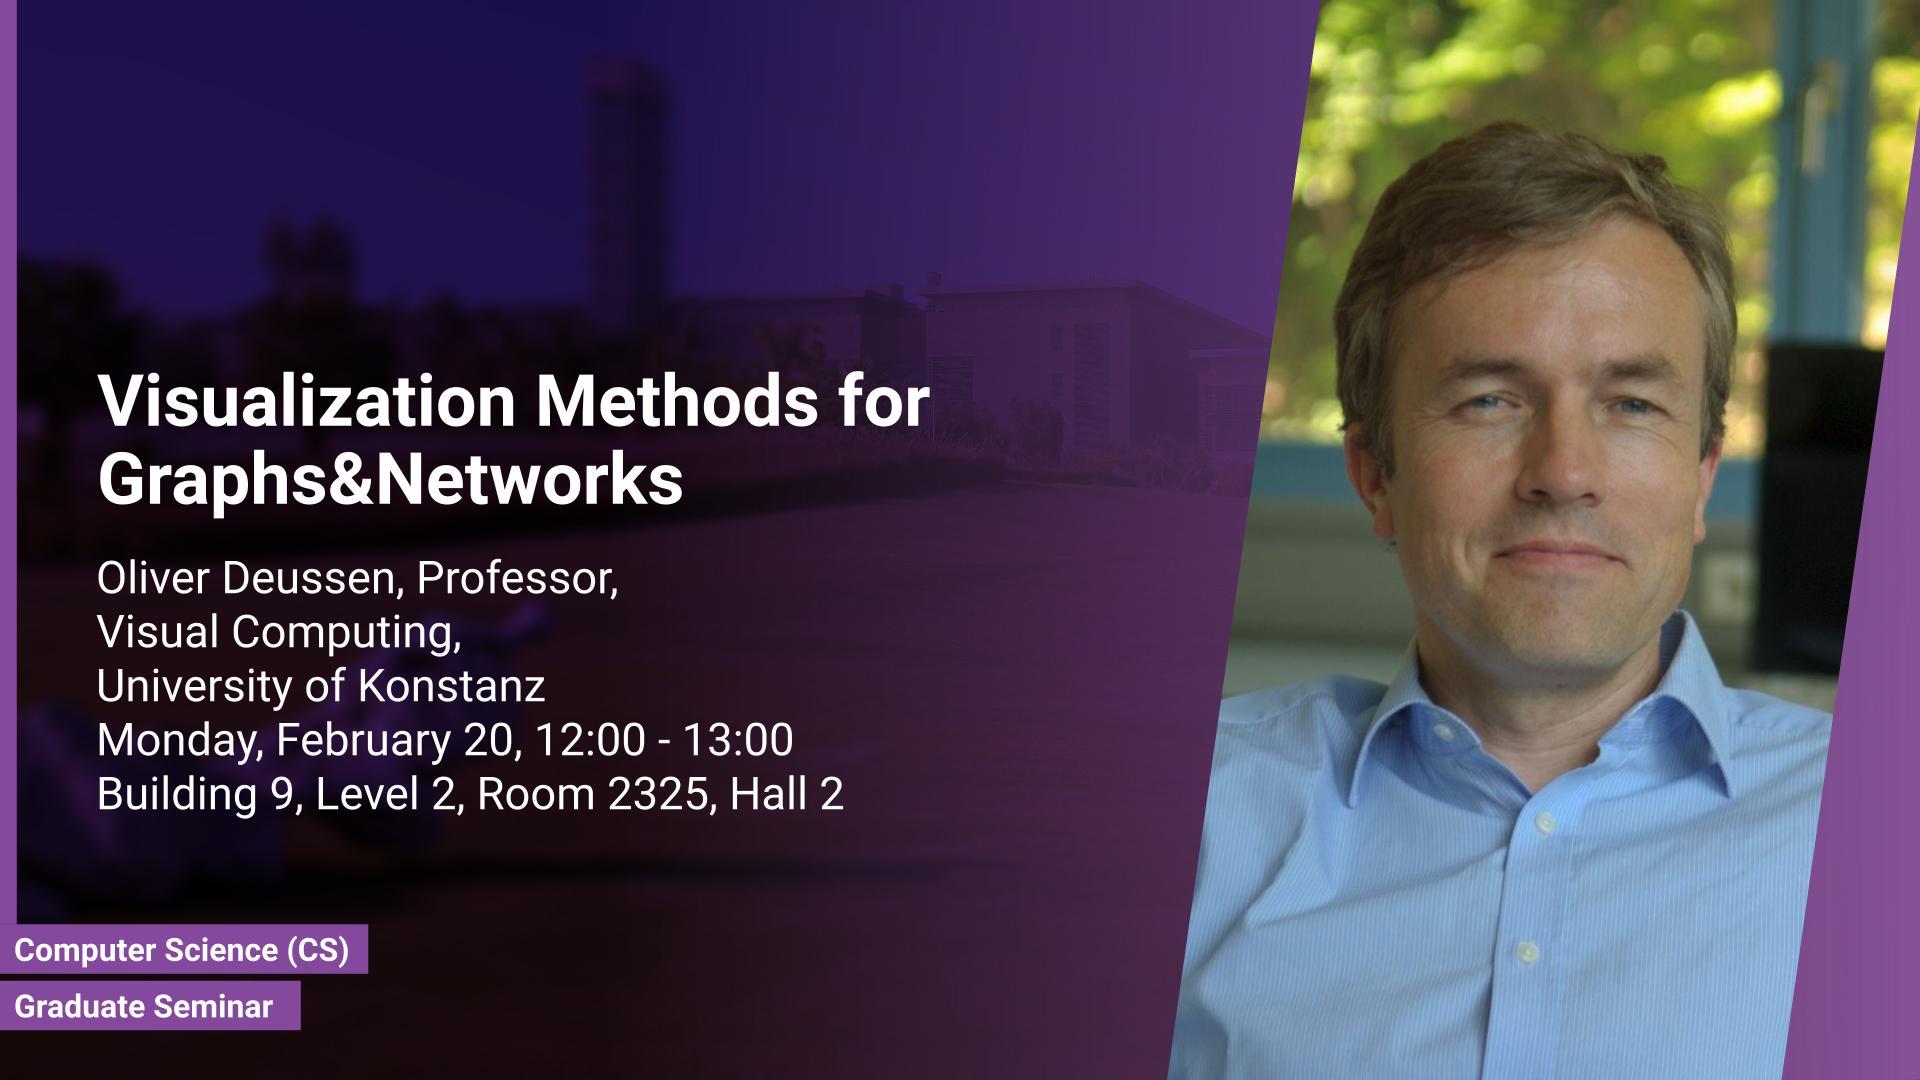 KAUST-CEMSE-CS-Graduate-Seminar-Oliver-Deussen-Visualization-Methods-for-Graphs&Networks.jpg